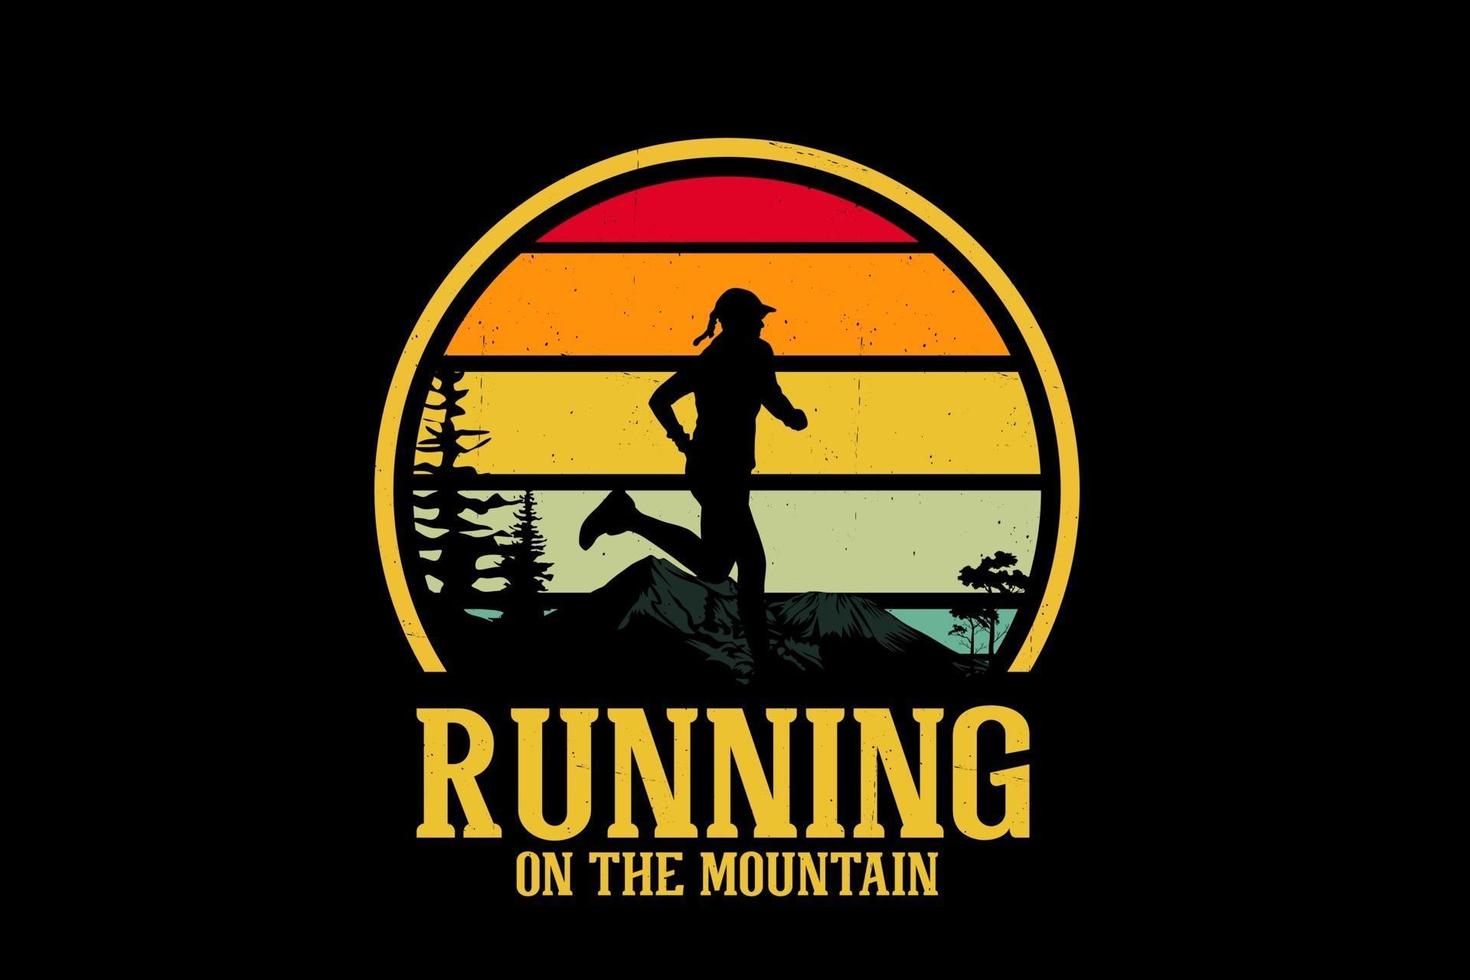 Running on mountain silhouette design vector